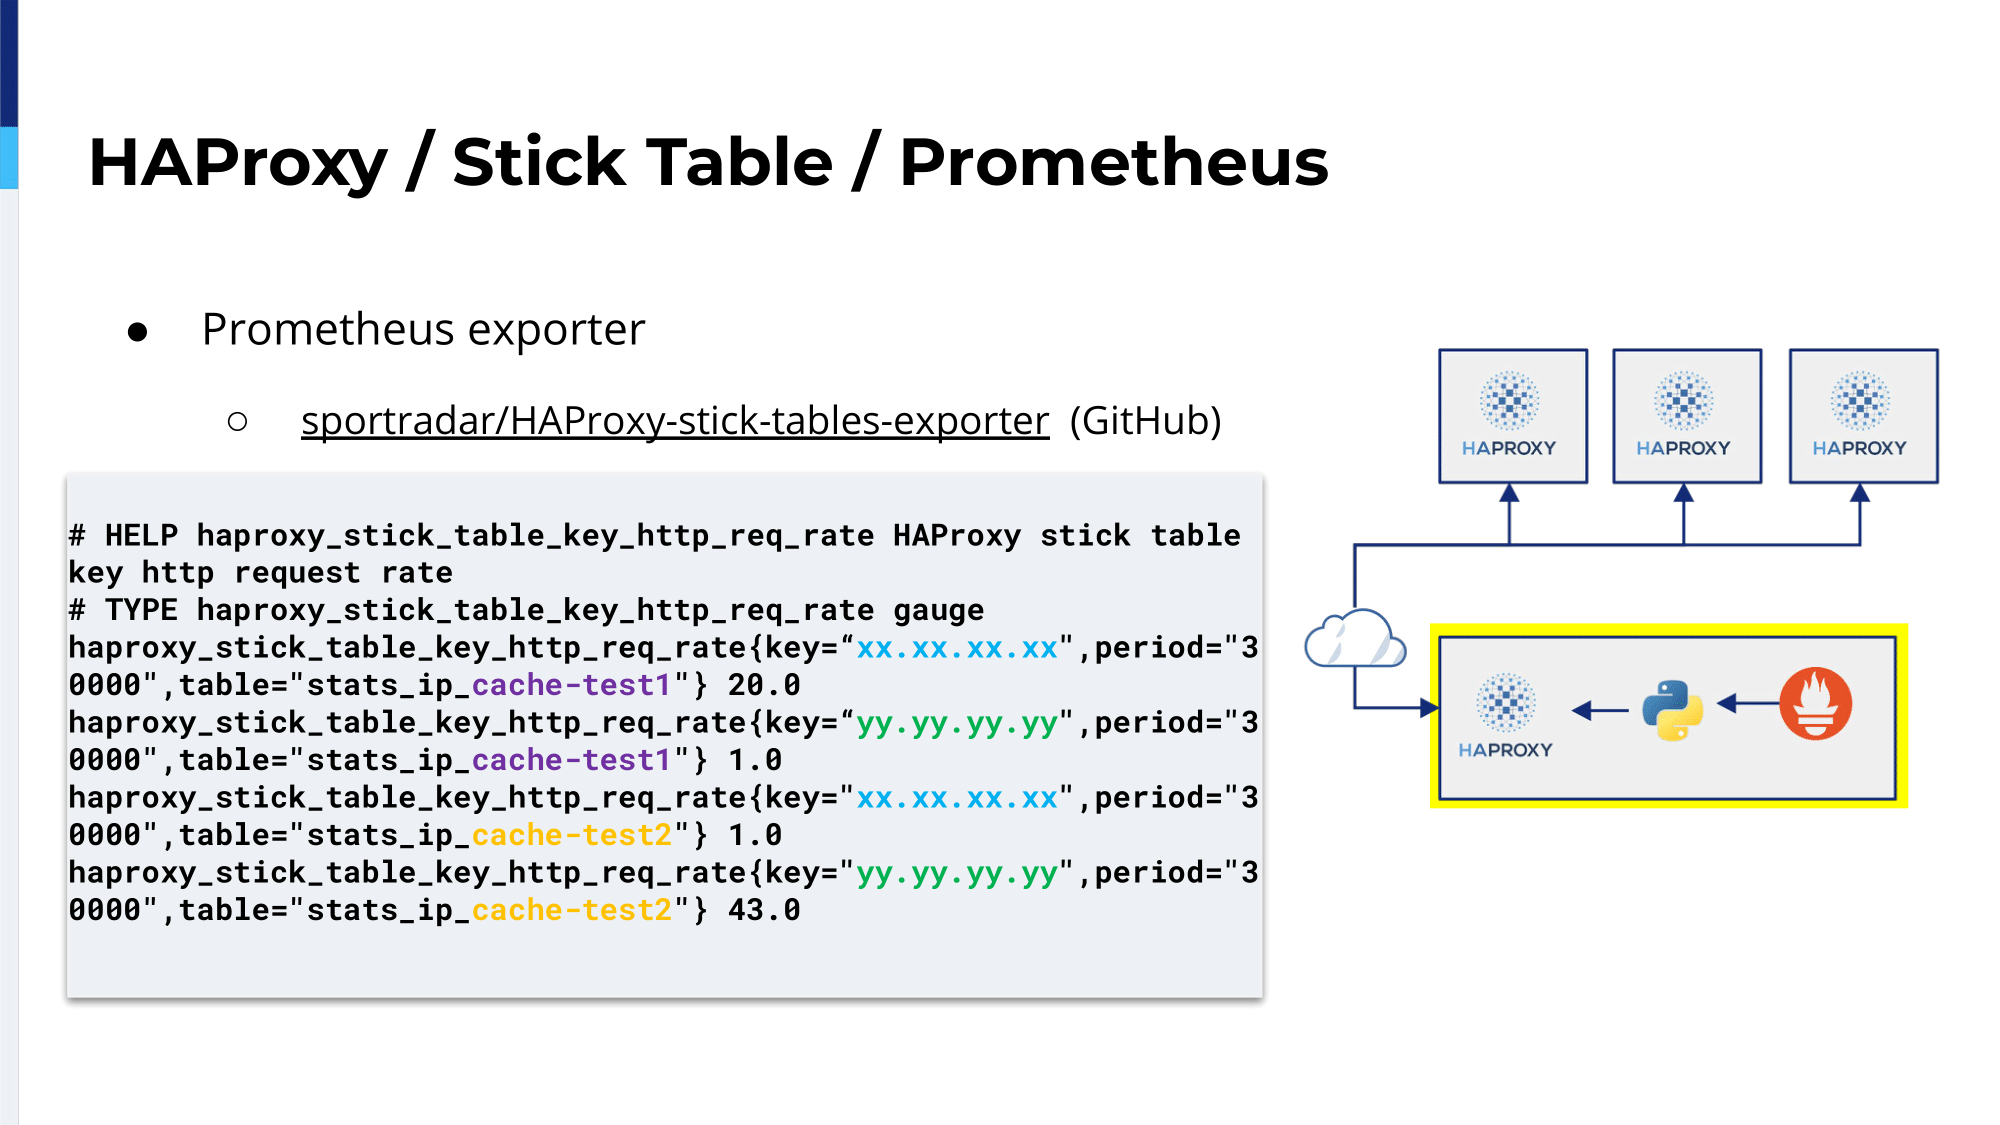 19.-haproxy-stick-tables-prometheus